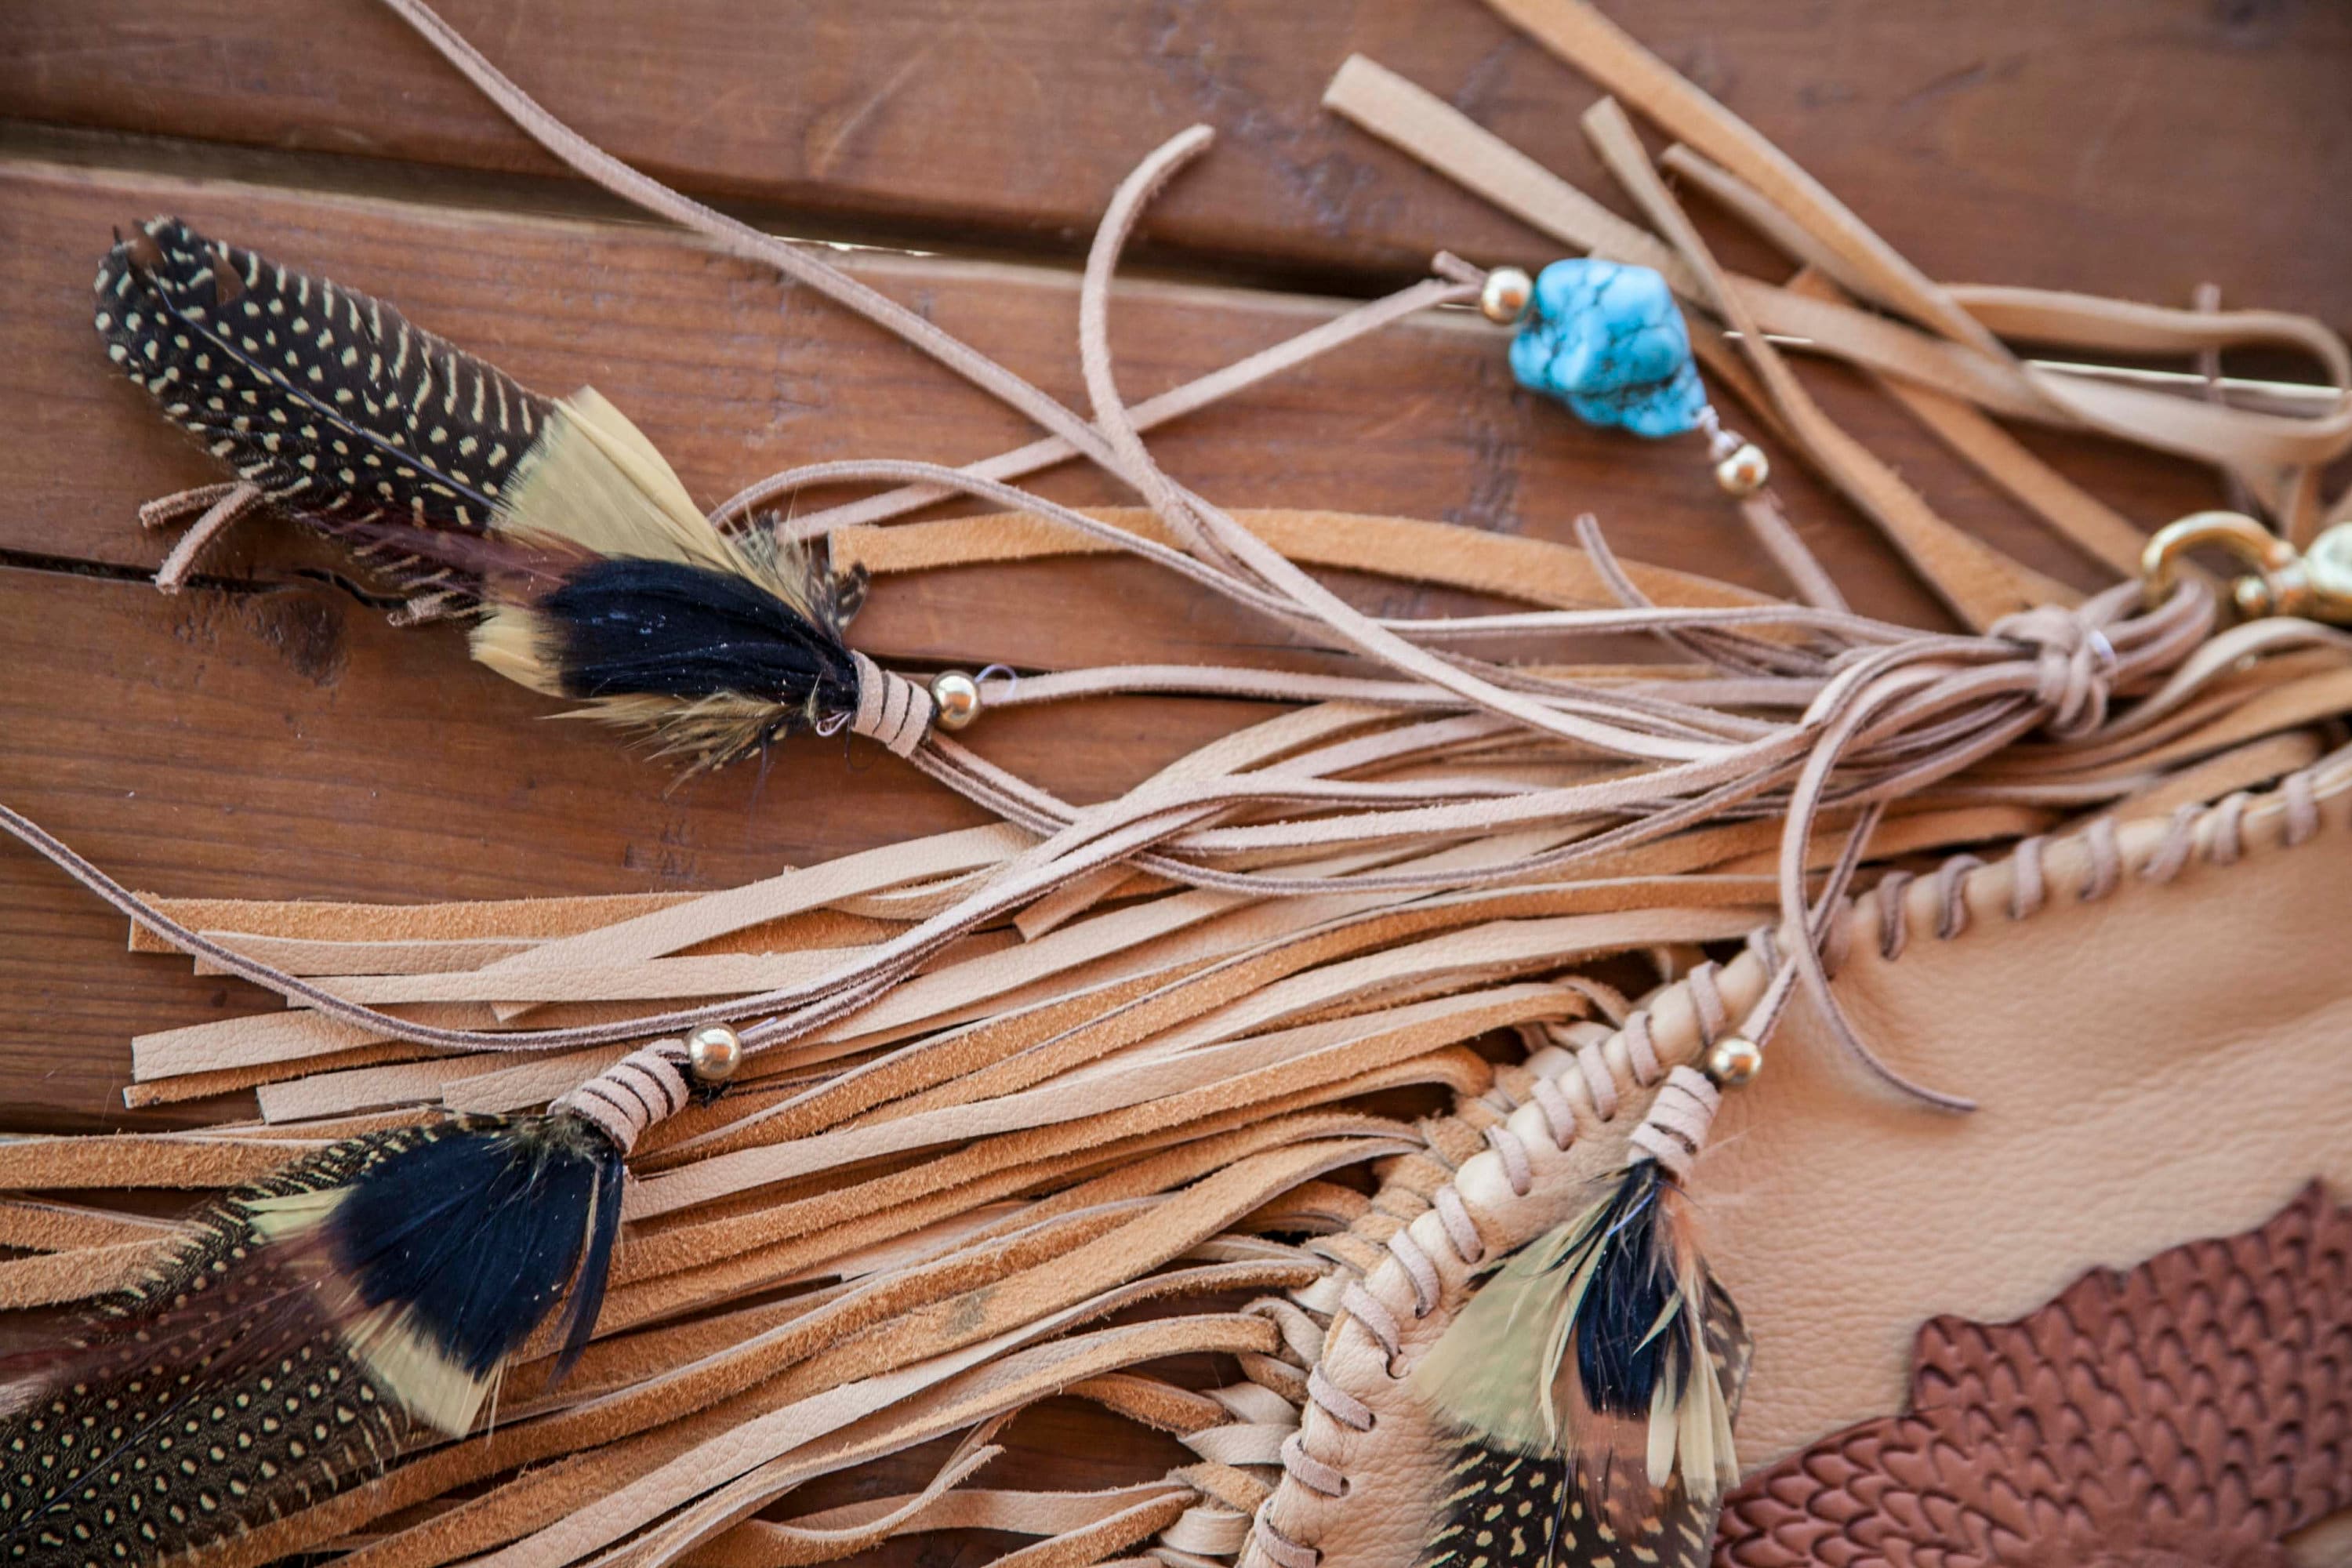 Lakota Eagle Bag Hand Crafted and Hand Tooled Turquoise | Etsy